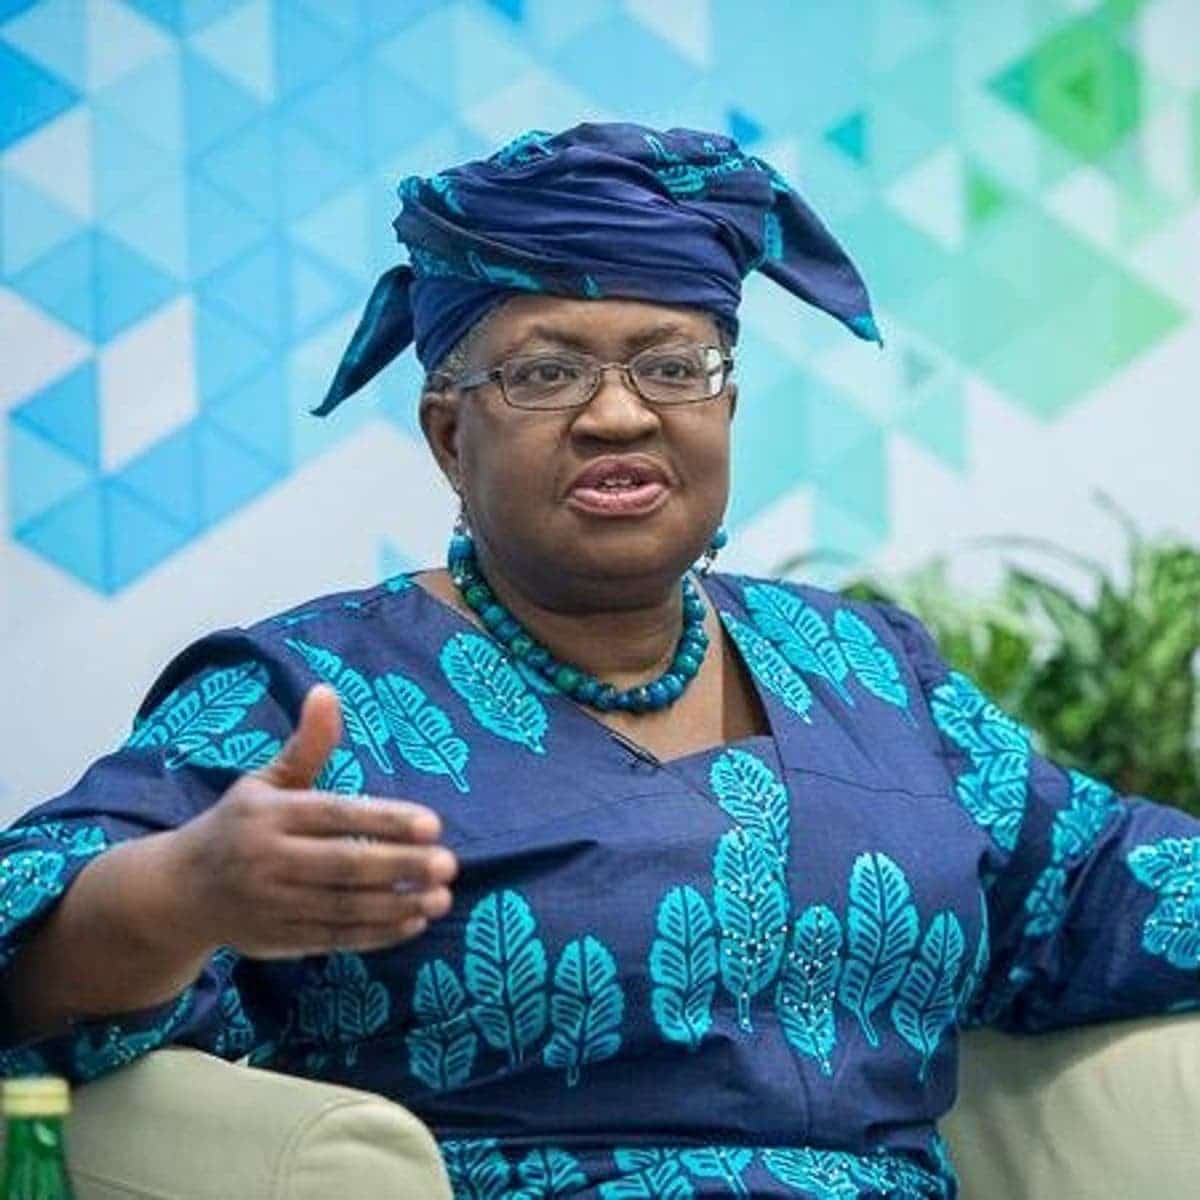 Who is Ngozi Okonjo-Iweala, the new Director-General of the World Trade Organization